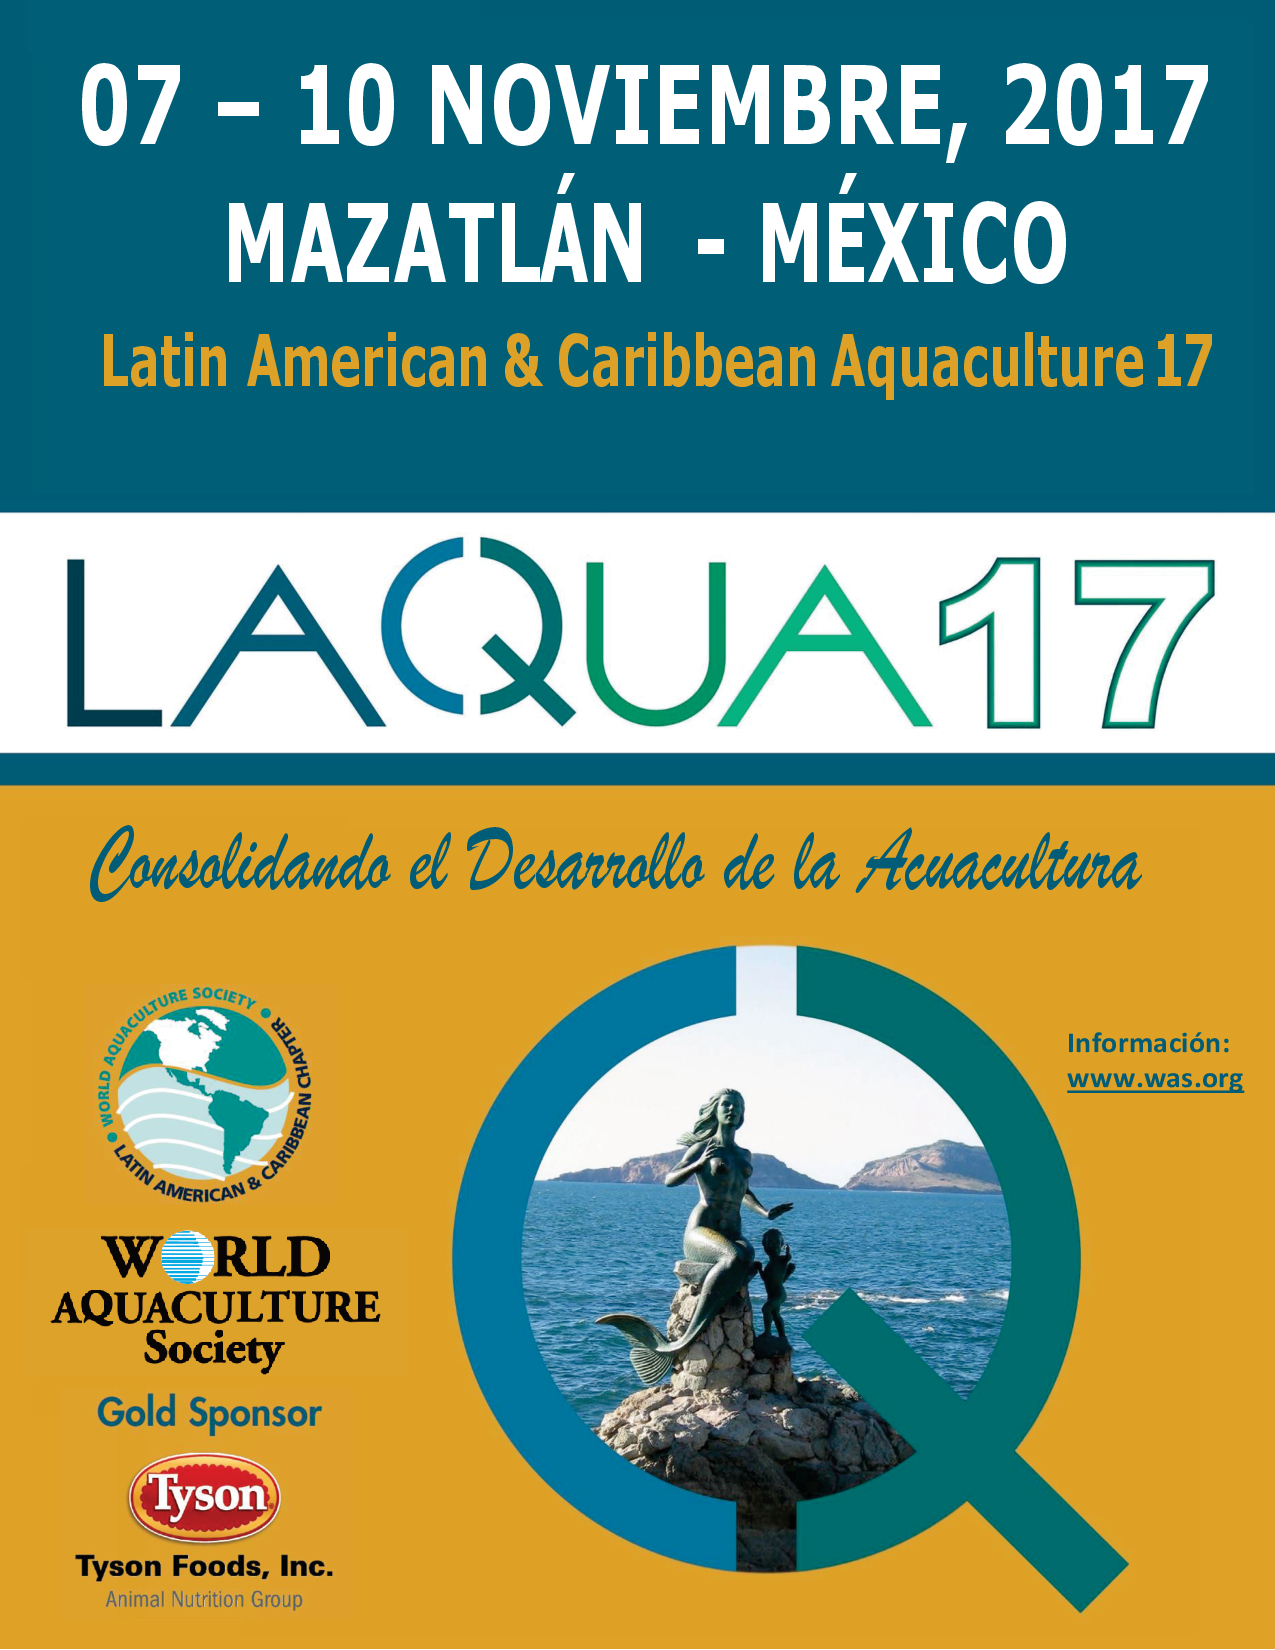 LACQUA17 - Latin American & Caribbean Aquaculture 17